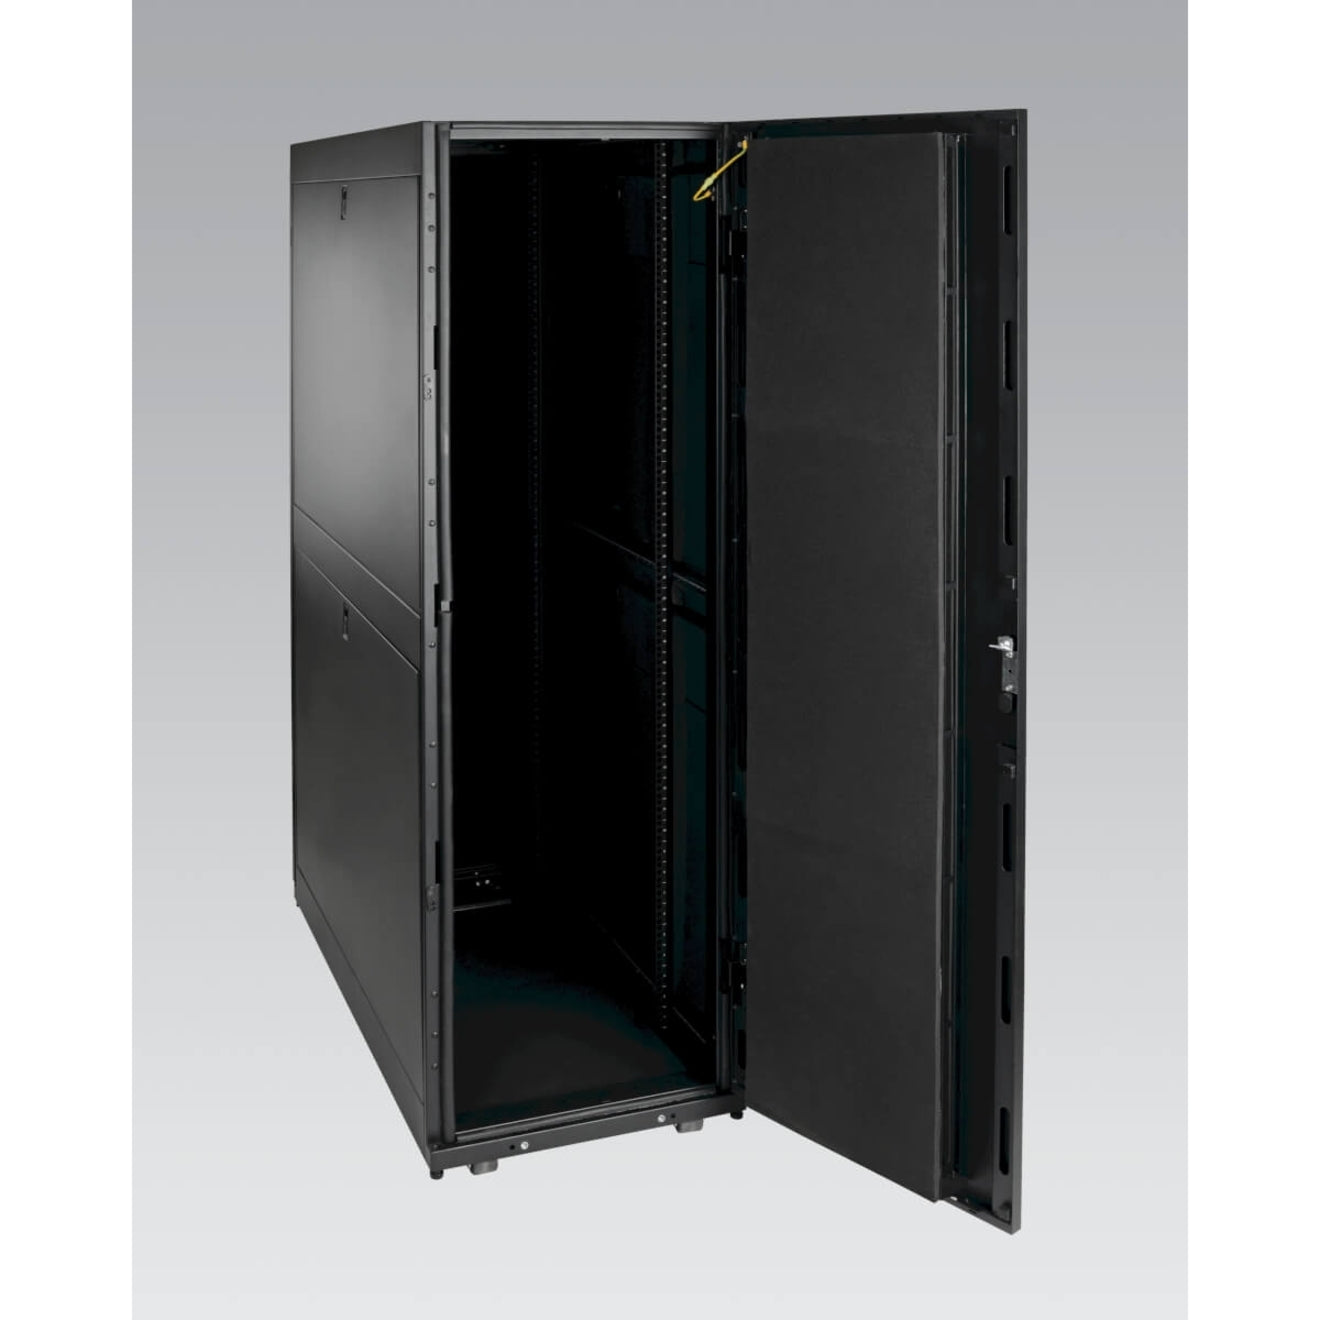 Tripp Lite SRQP42UB SmartRack 42U Quiet Server Rack Enclosure Cabinet, 5 Year Warranty, Floor Standing, 2400 lb Static/Stationary Weight Capacity